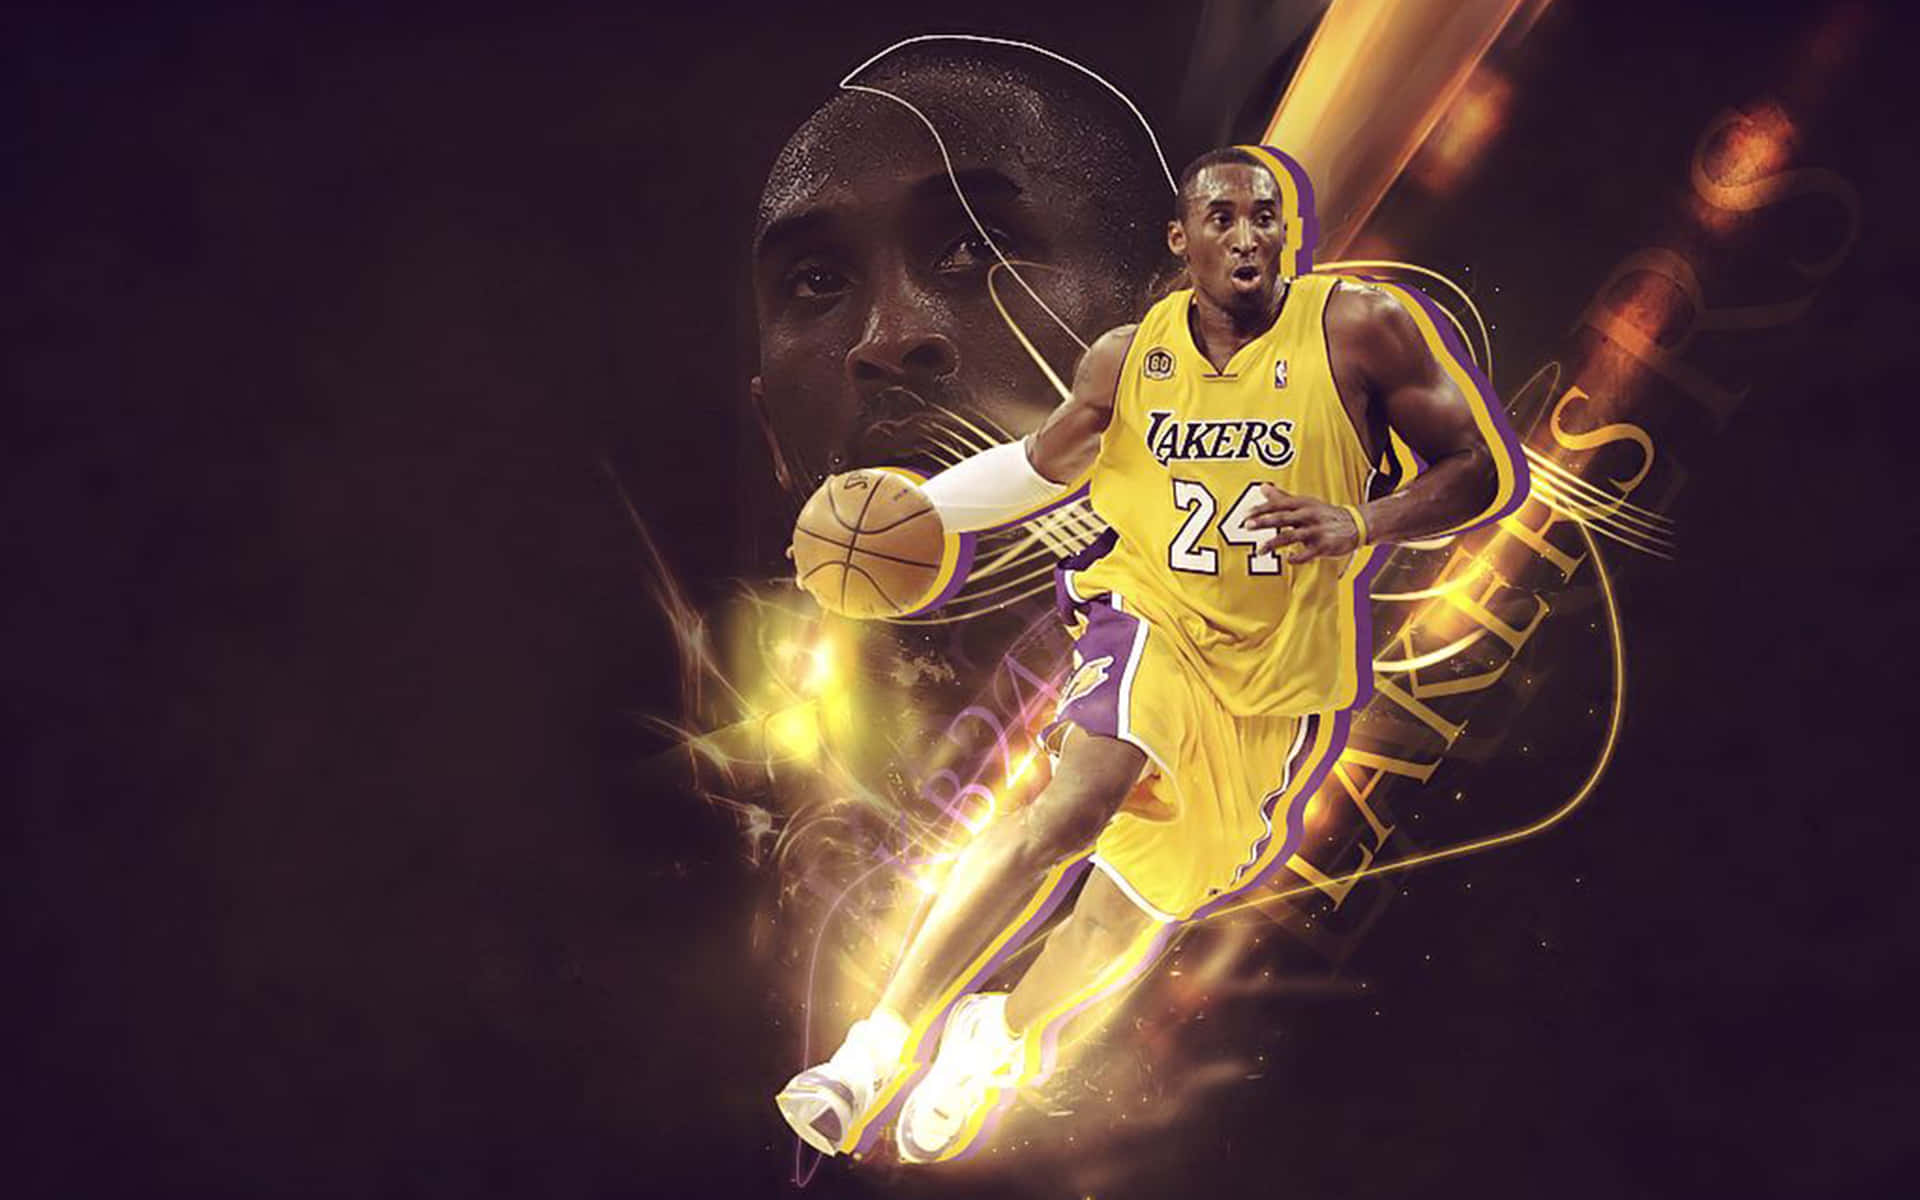 Los Angeles Lakers legend Kobe Bryant